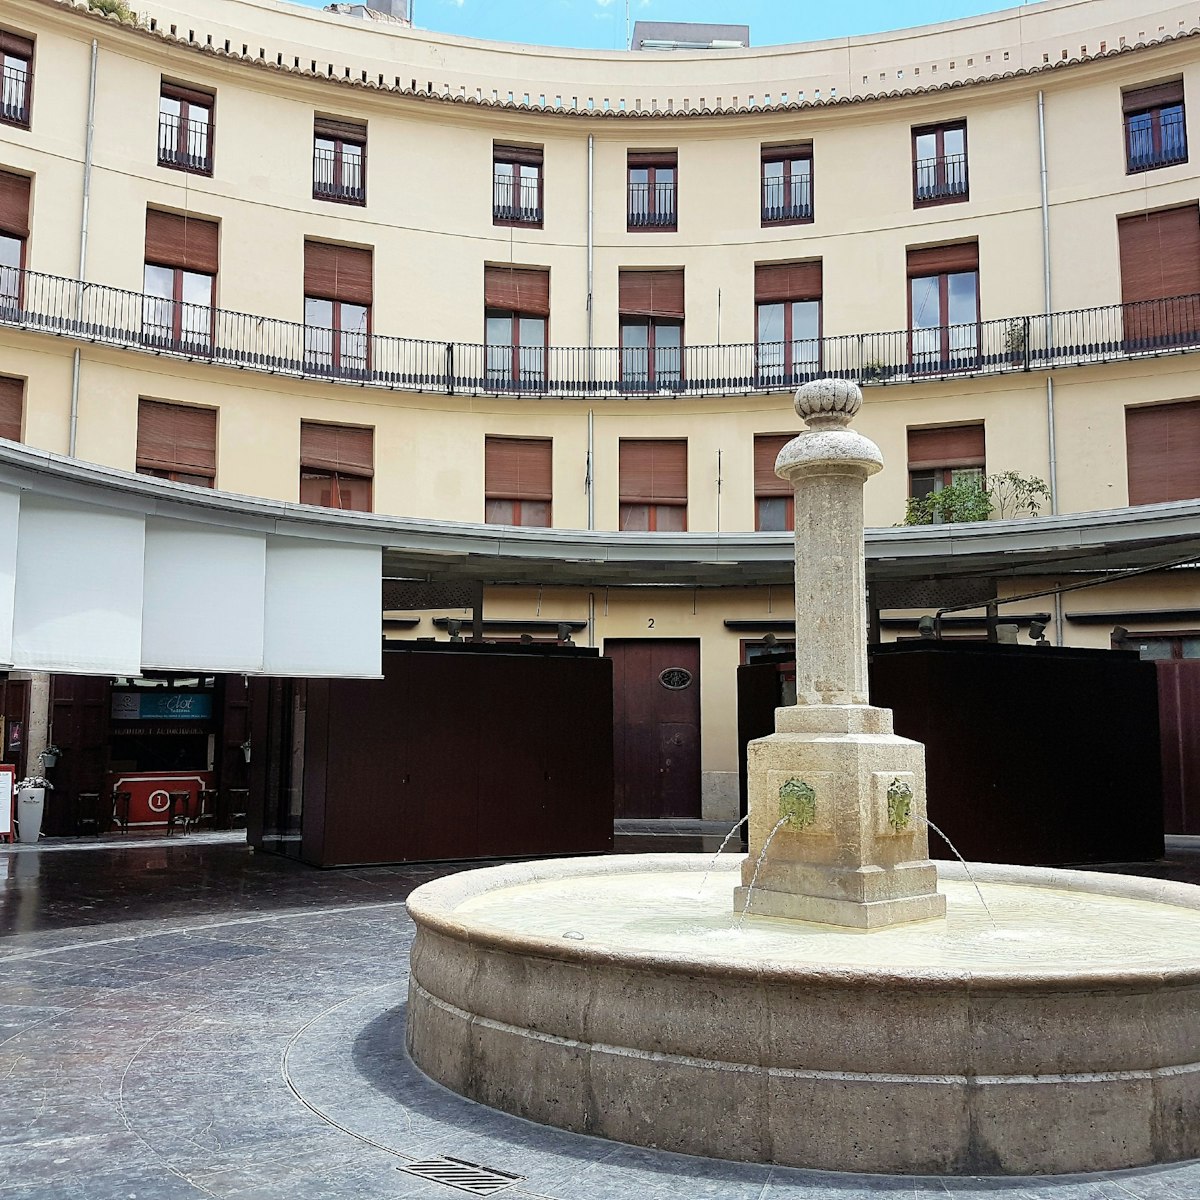 Fountain inside Plaza Redonda with market stalls.